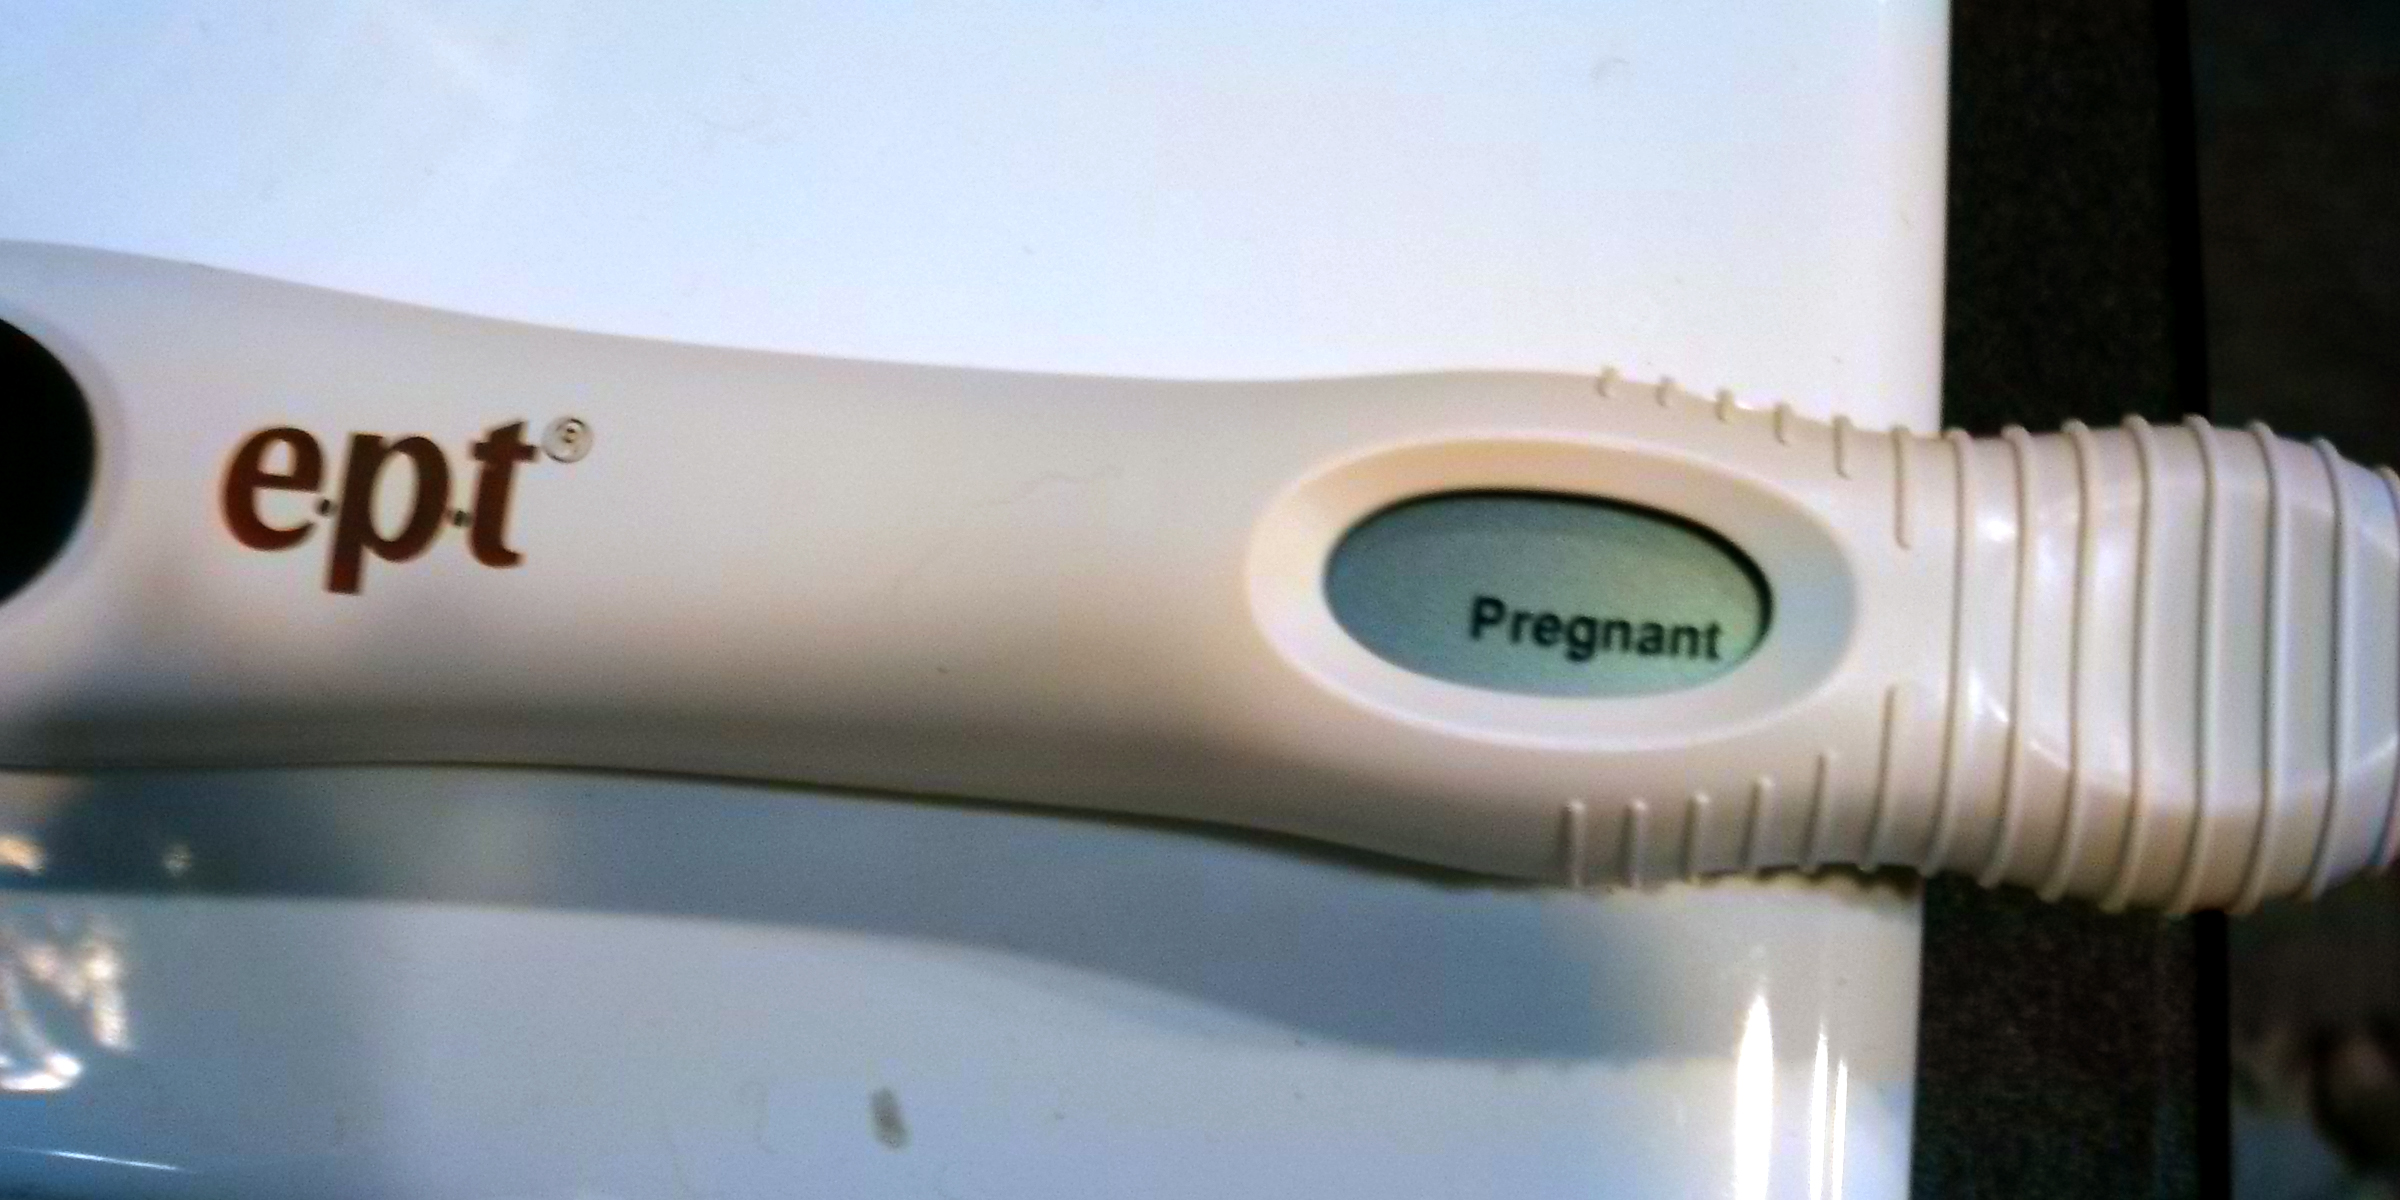 A positive pregnancy test | Source: Flickr